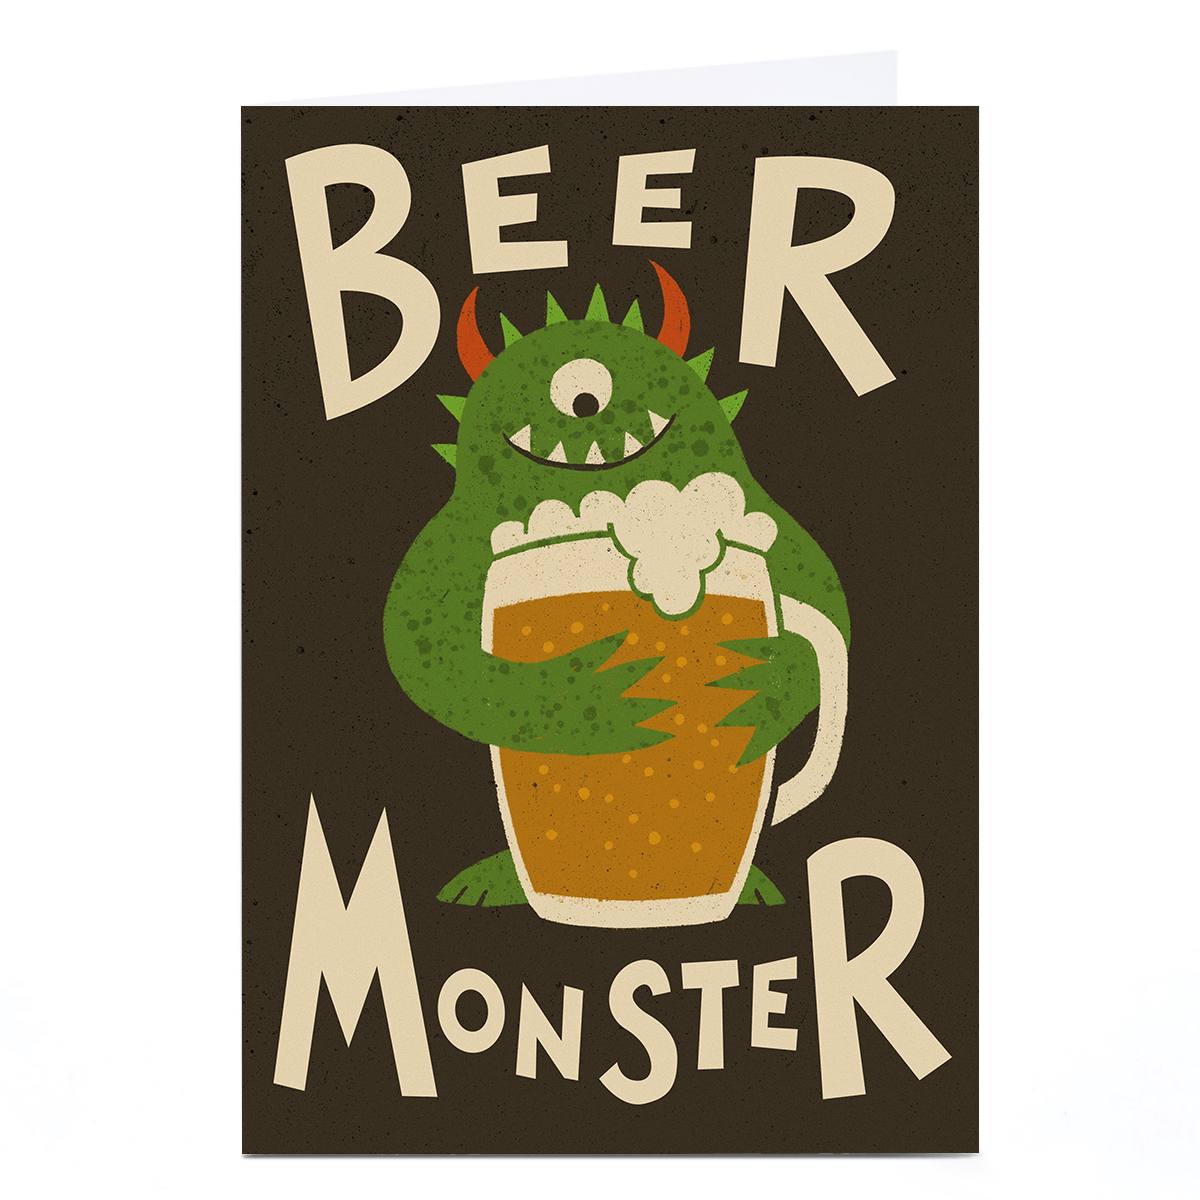 Personalised Tin Bath Card - Beer Monster